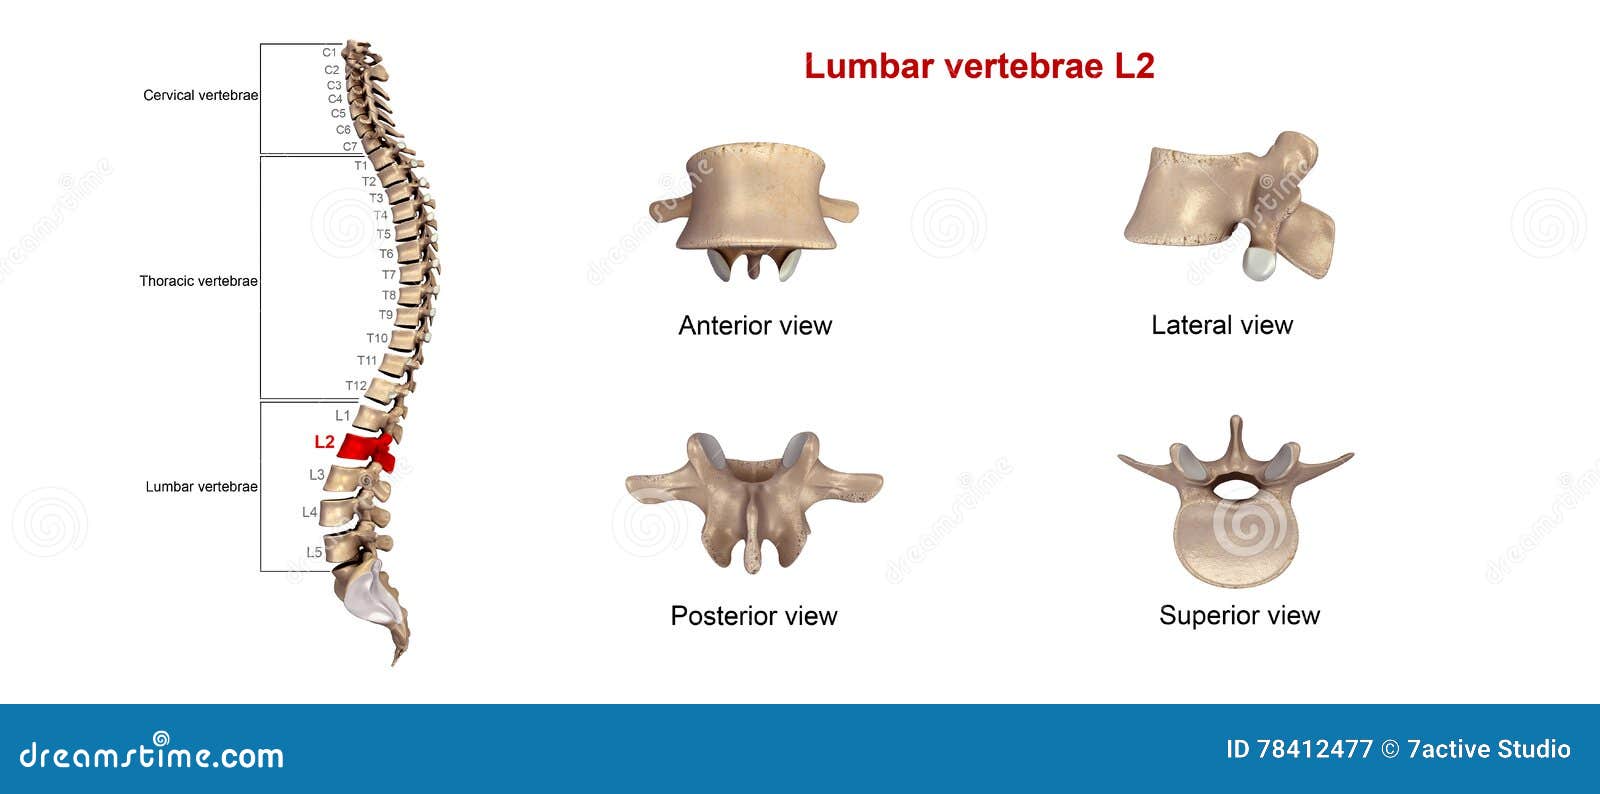 lumbar vertebrae l2